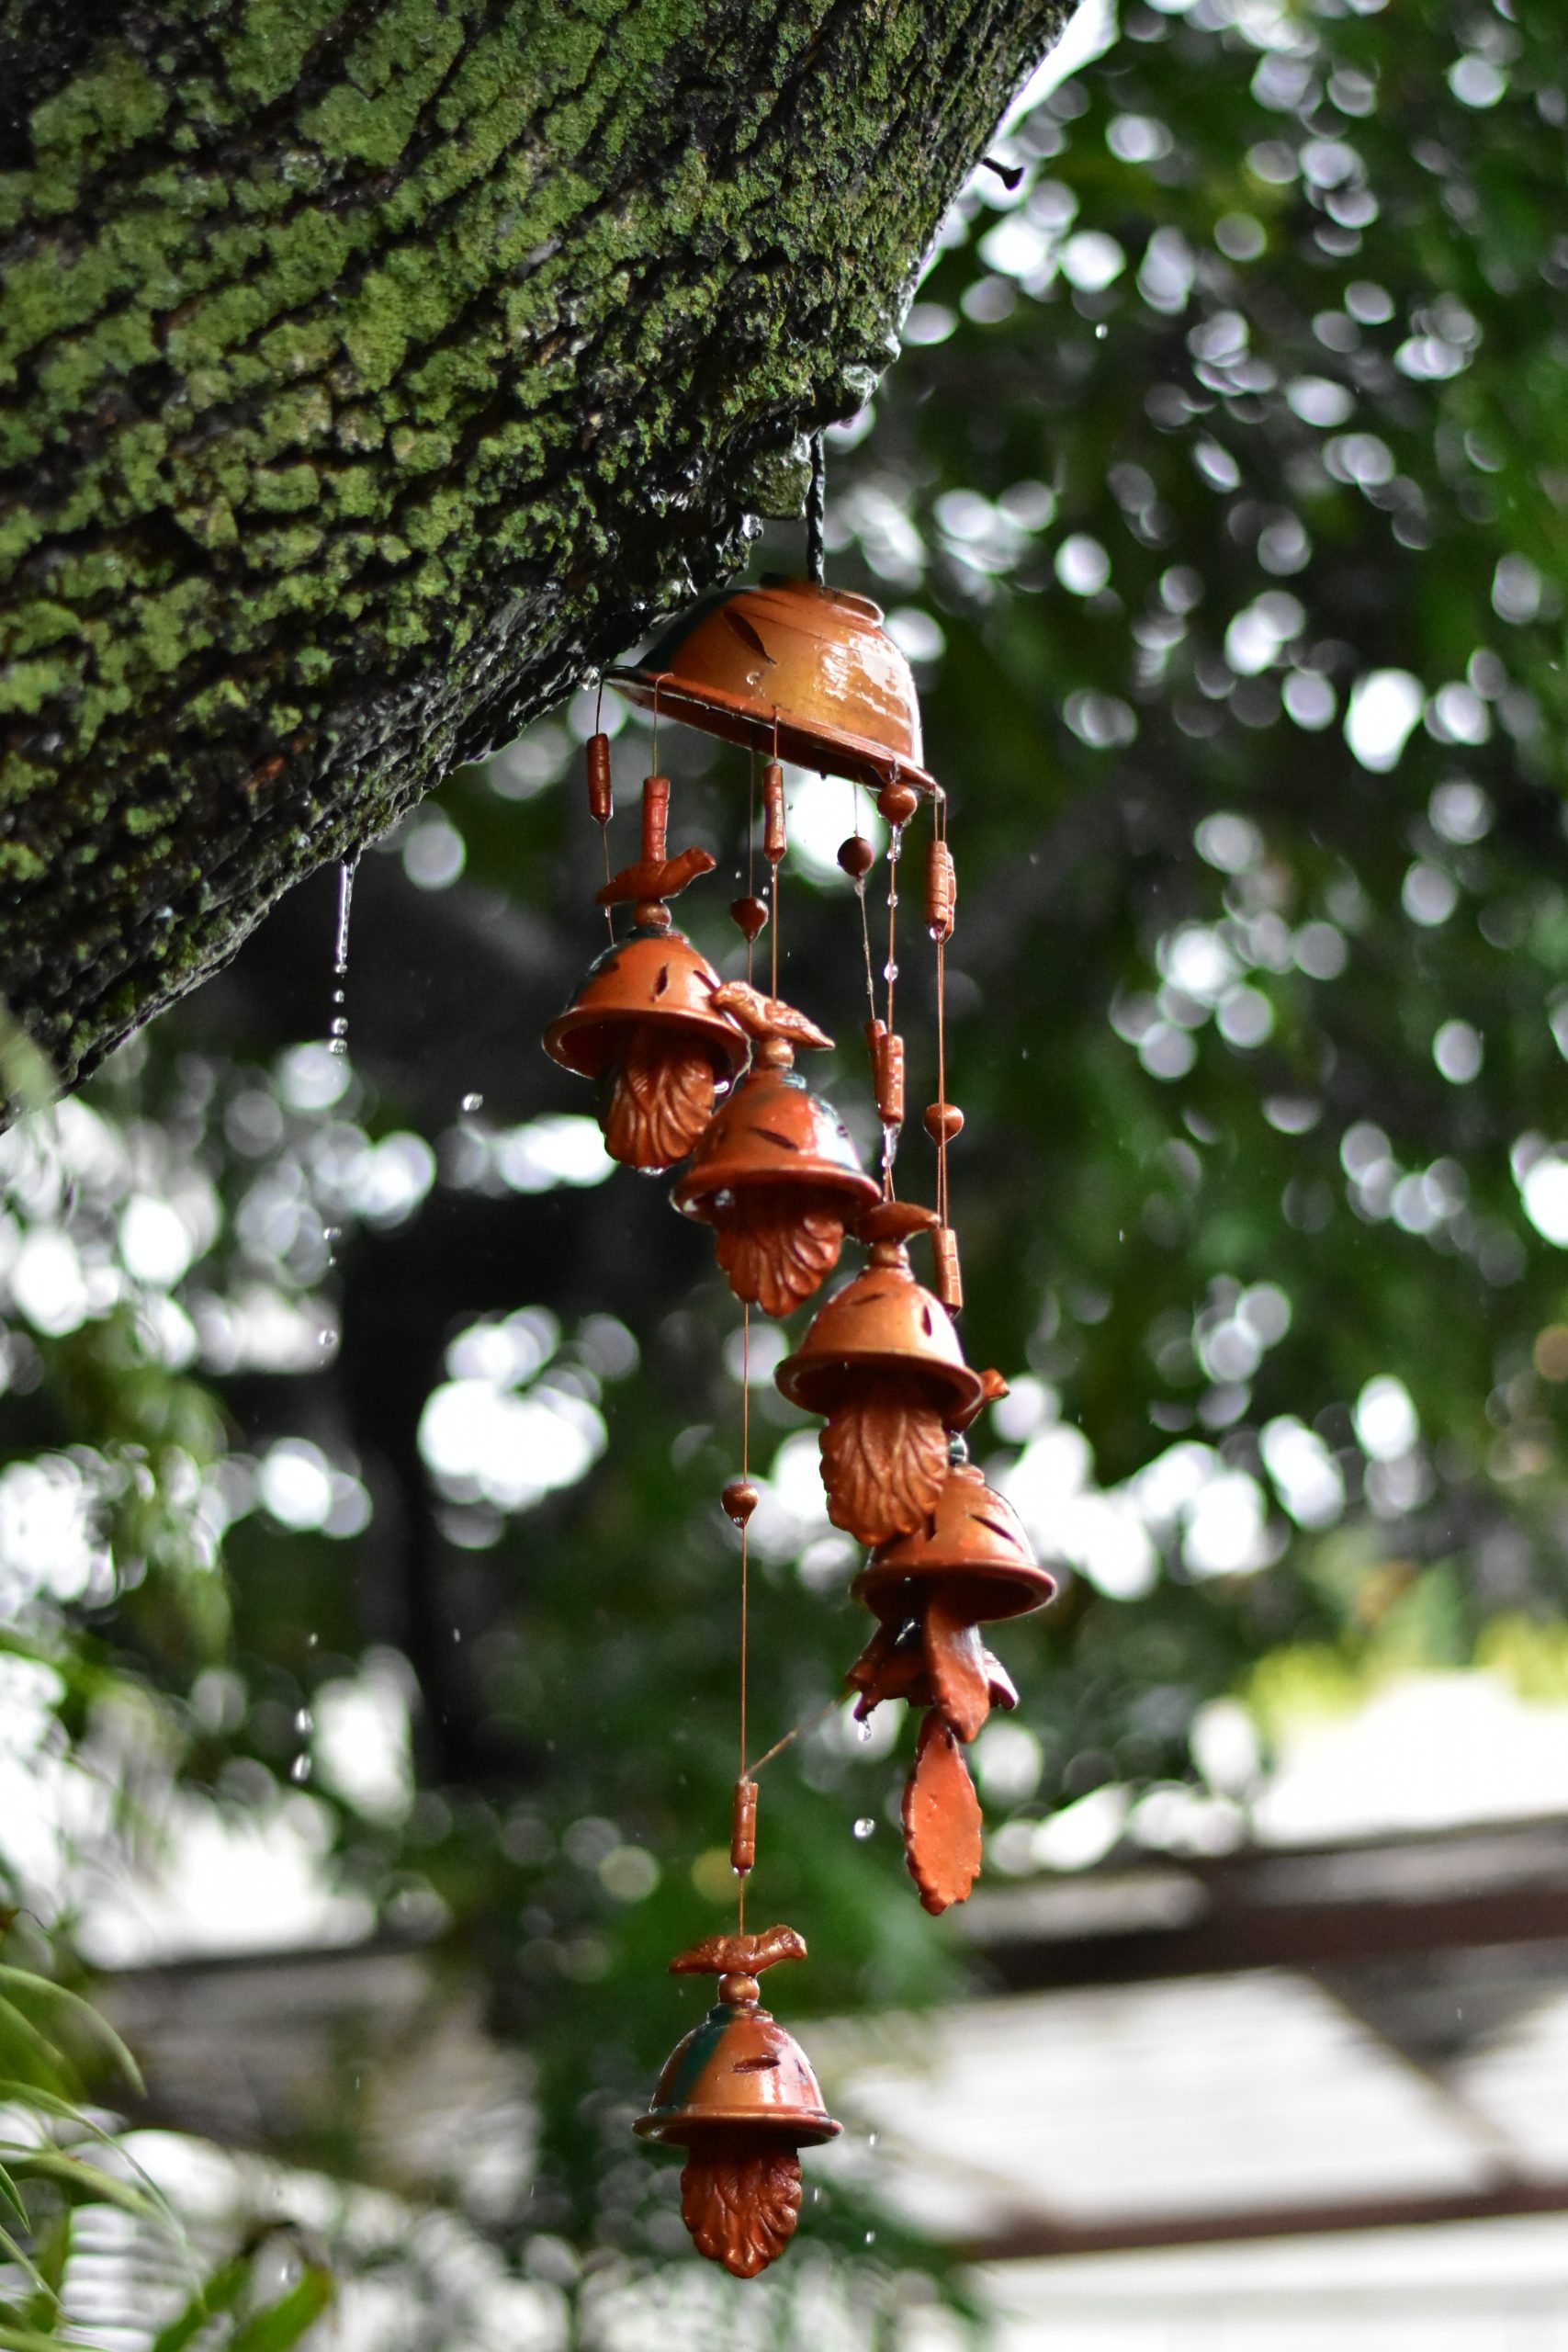 Decorative wind bells in the garden